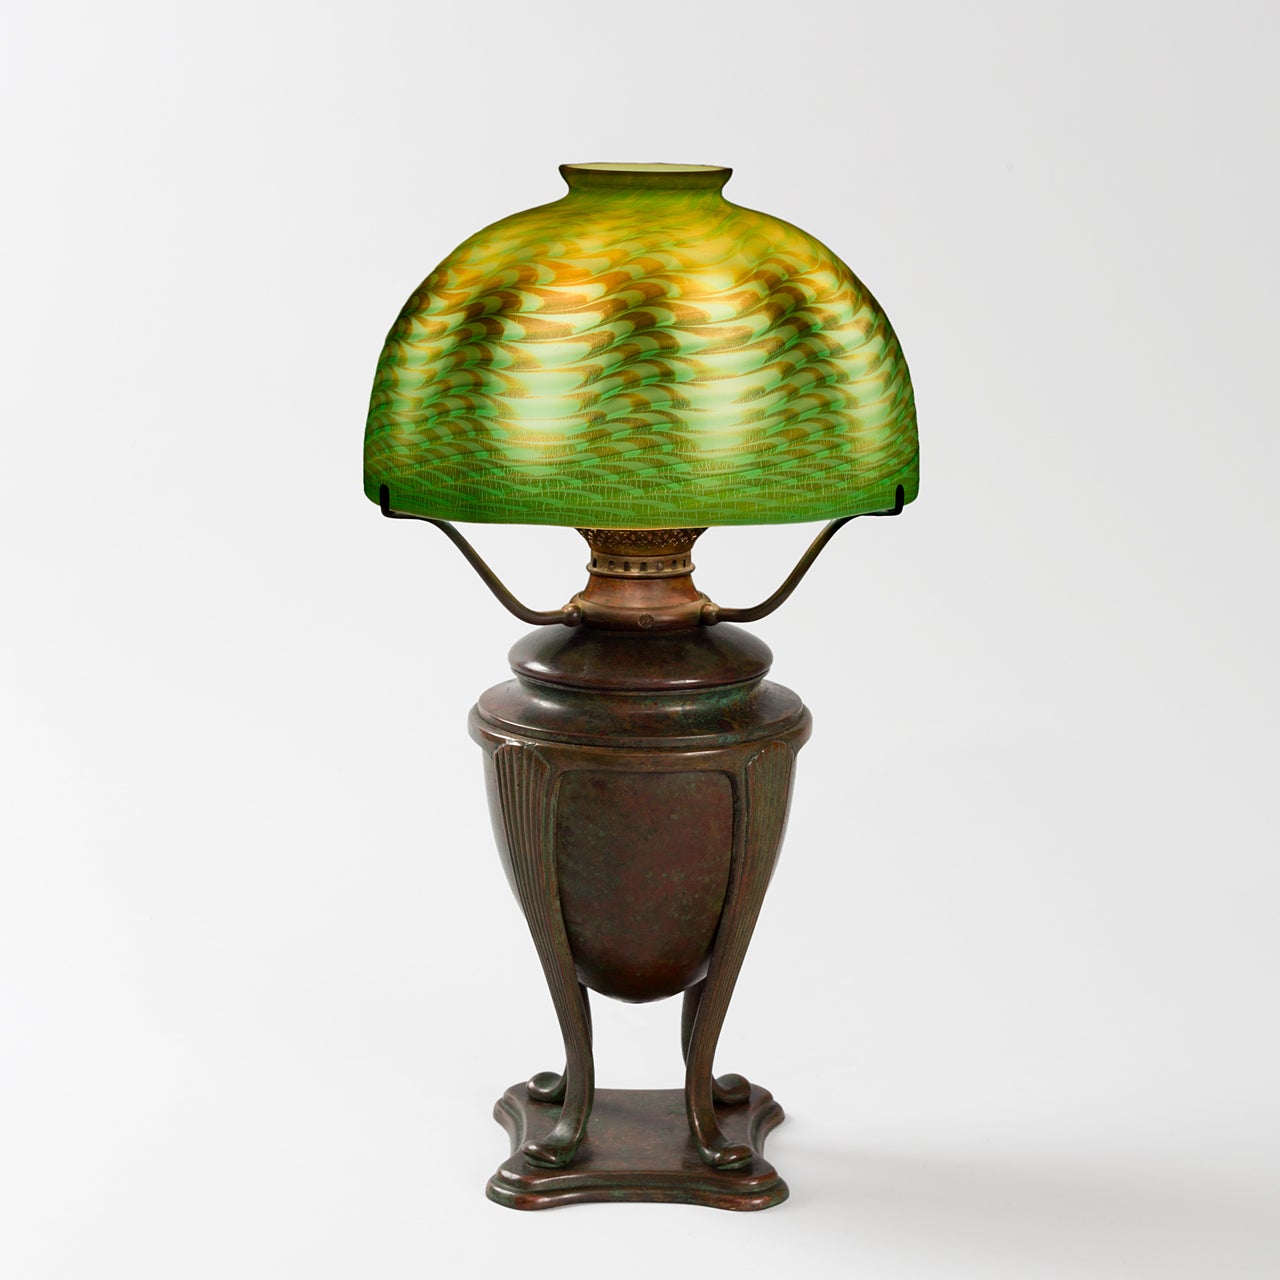 Tiffany Studios "Favrile" Lamp